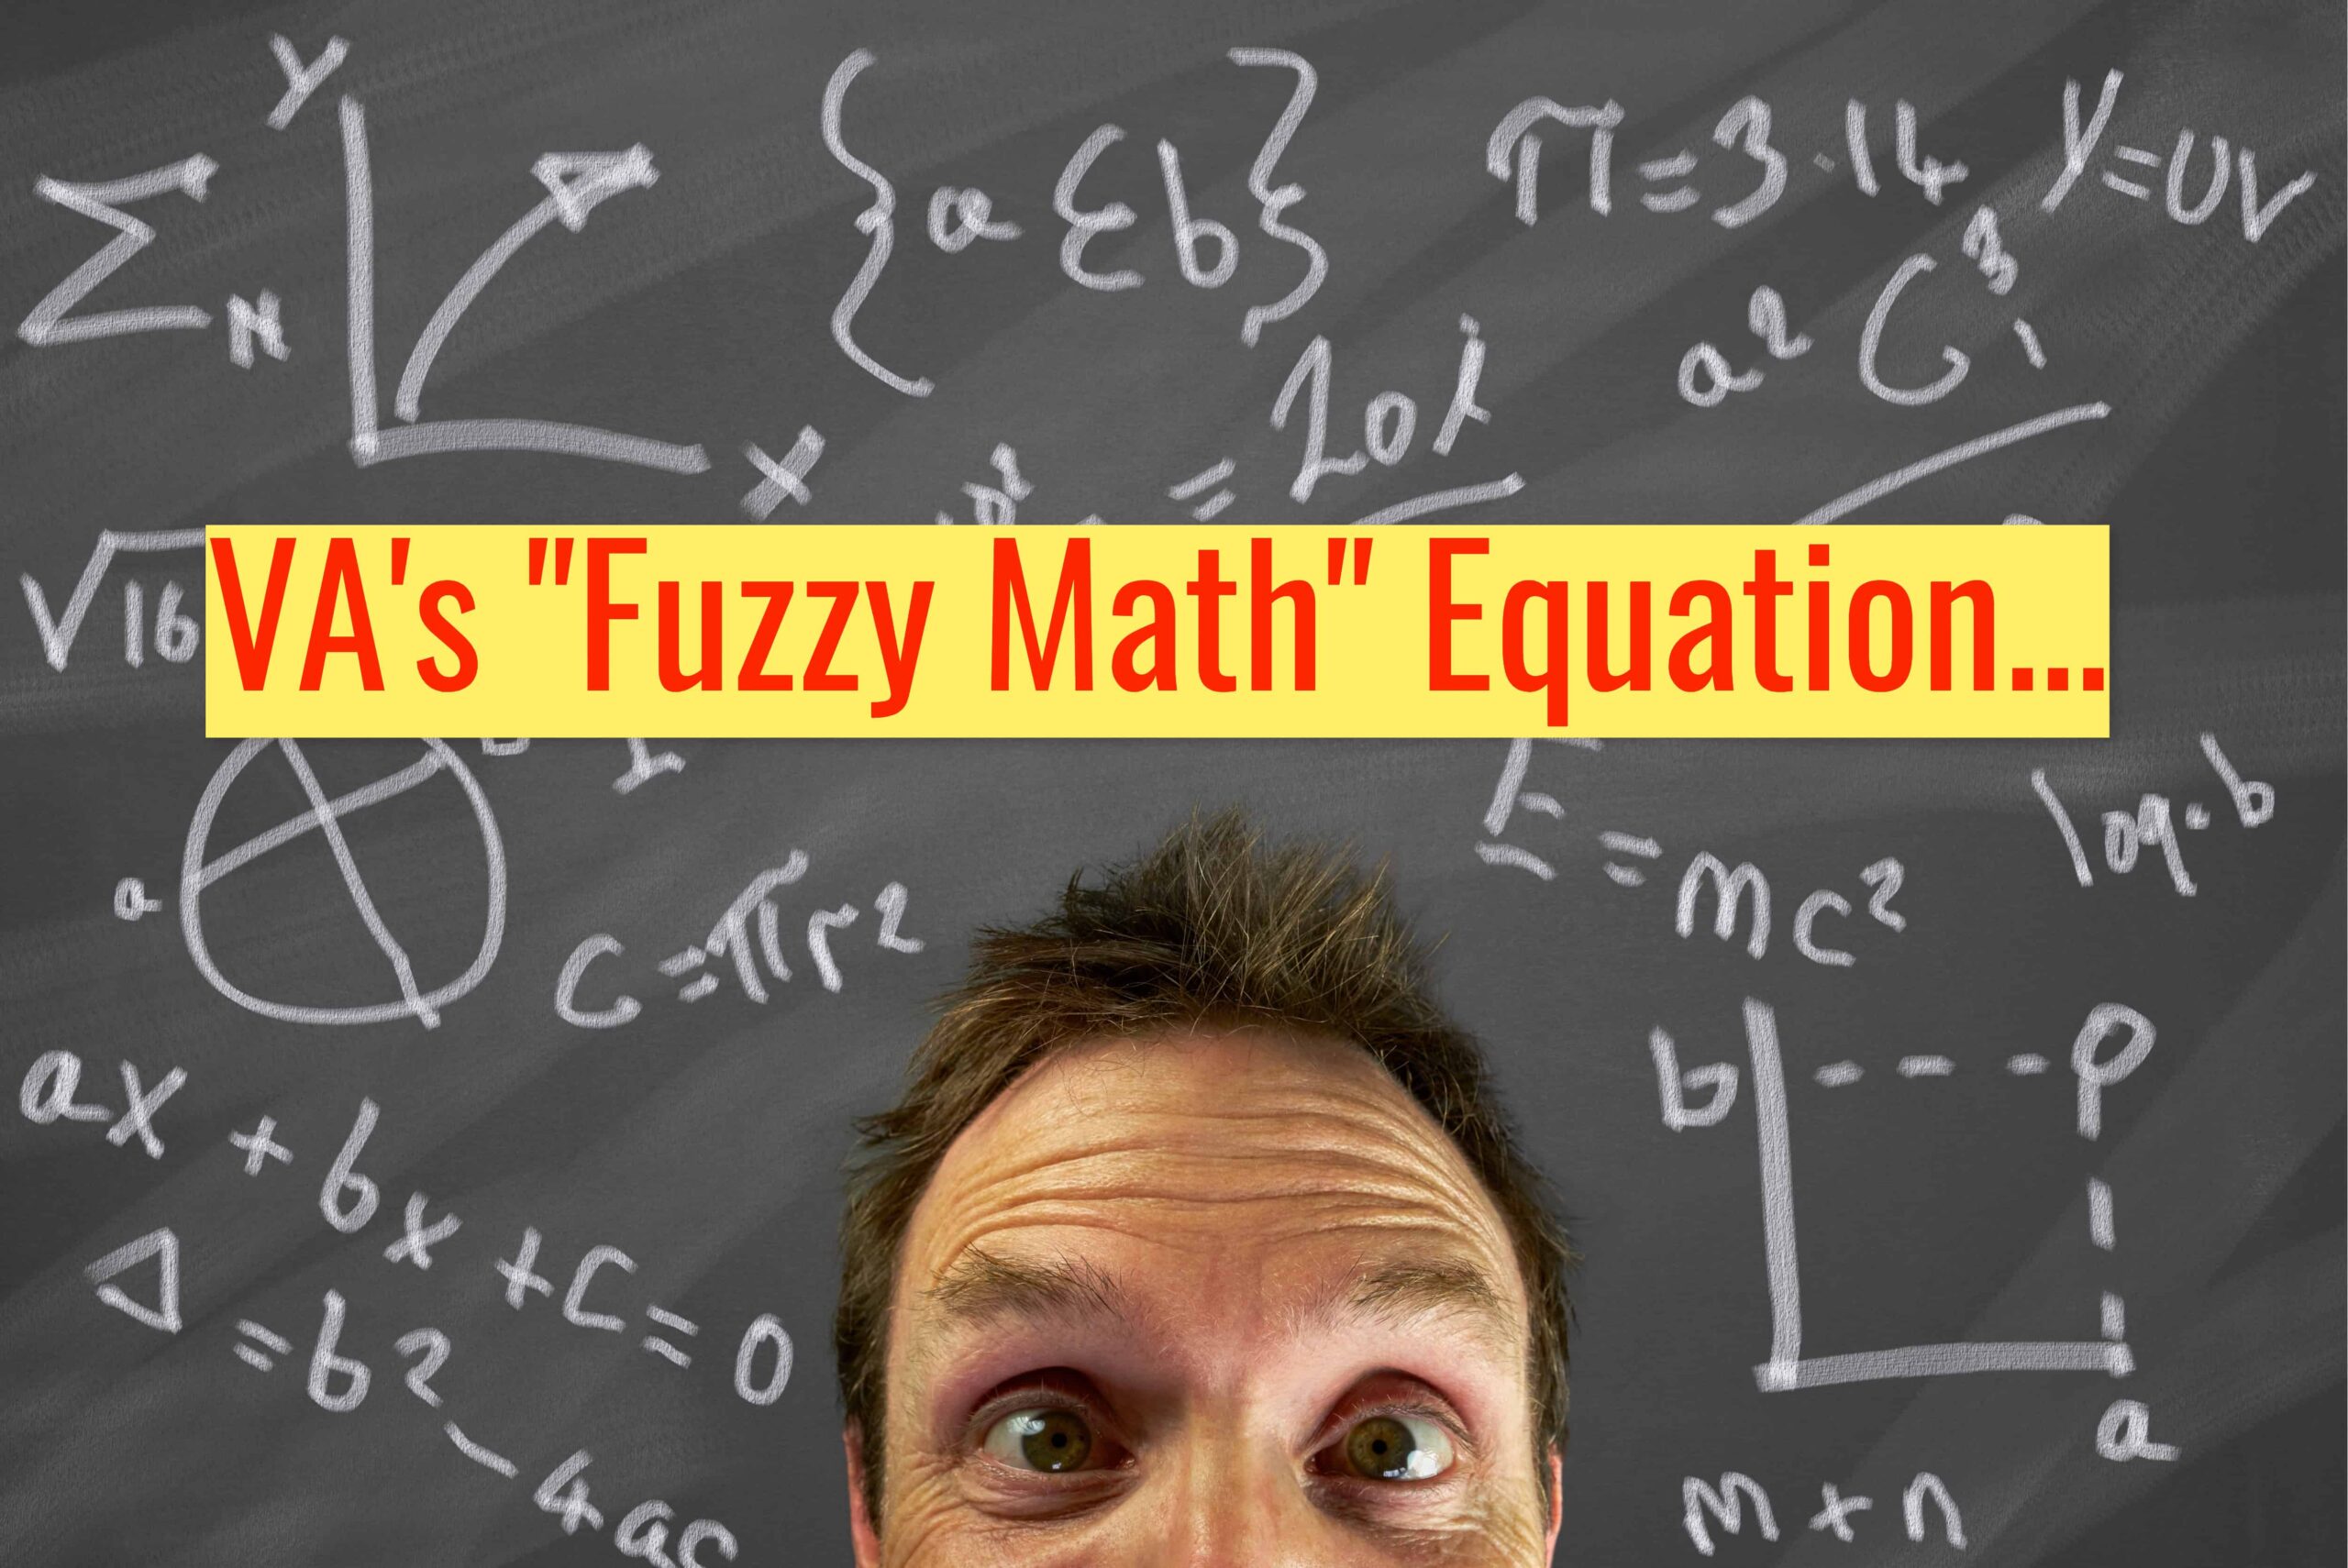 The VA Claims Insider App! VA fuzzy math equation